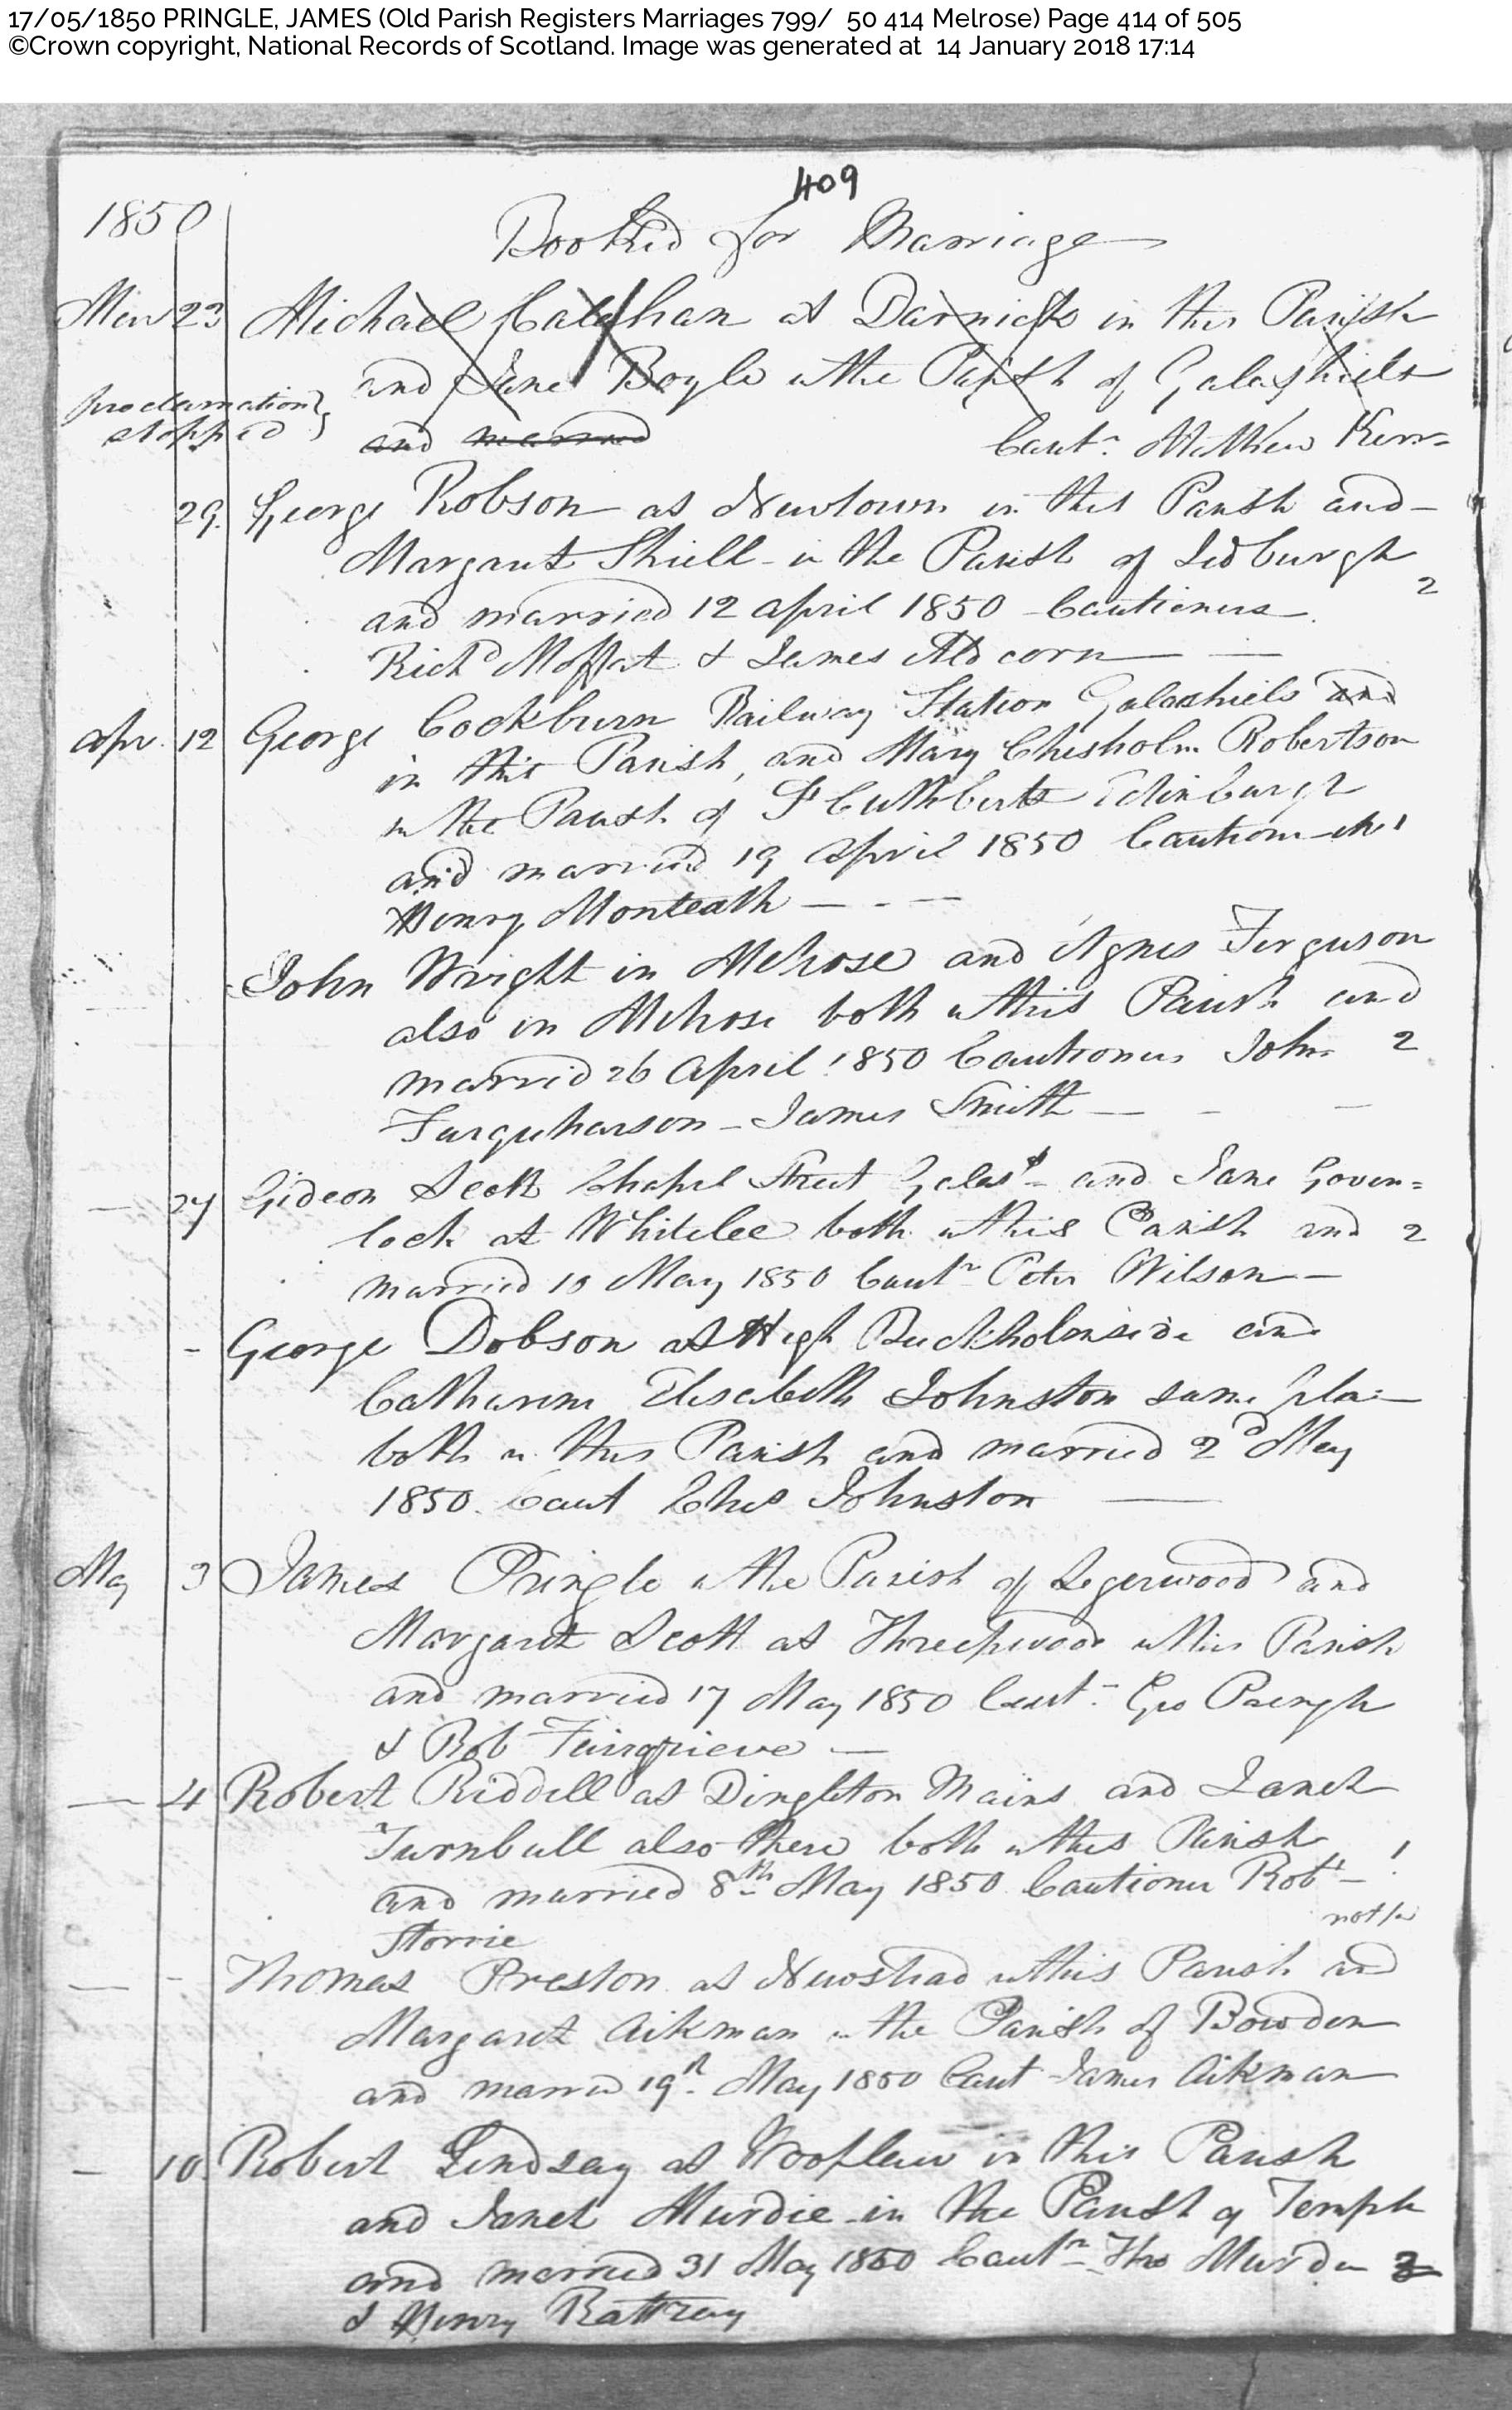 JamesPringleMargaretScott_M1850 Melrose, May 17, 1850